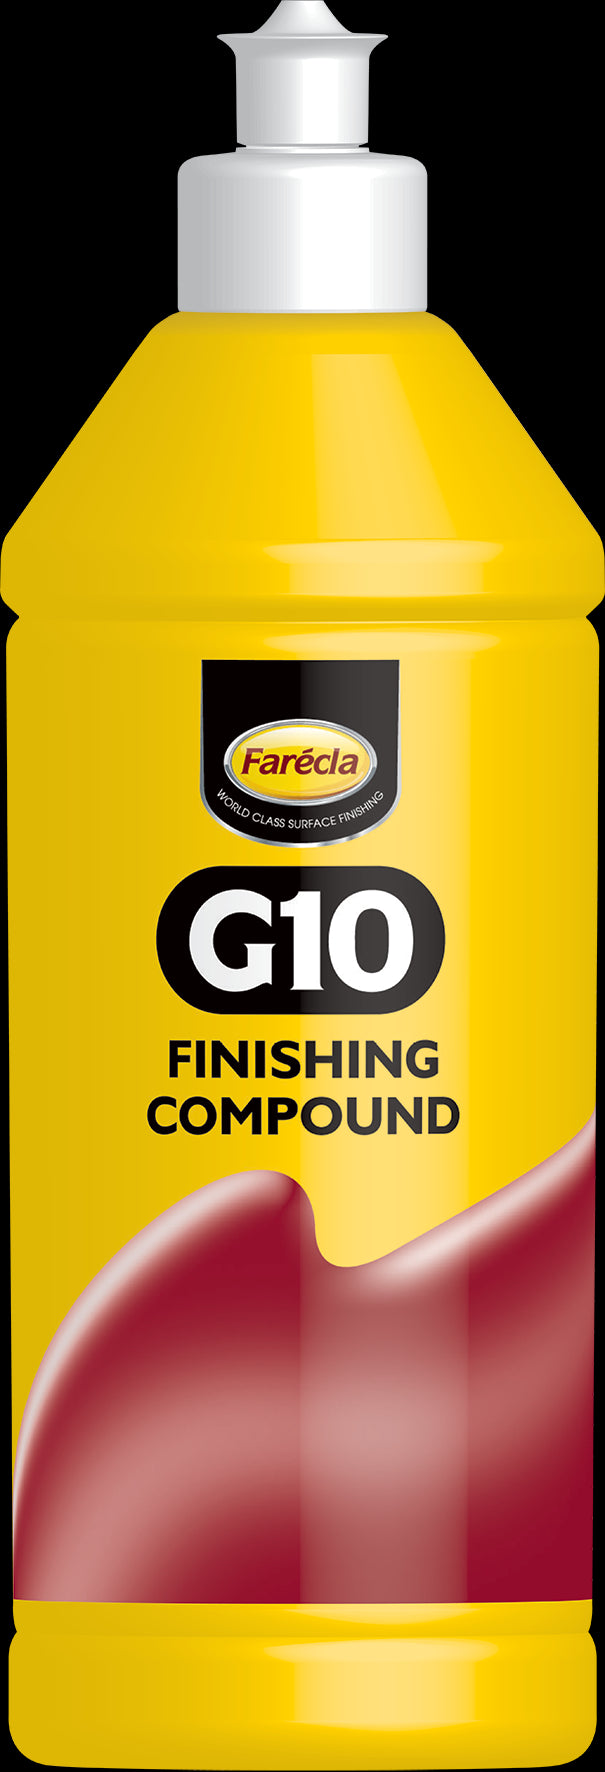 G10500 G10 Finishing Compound - 500ml